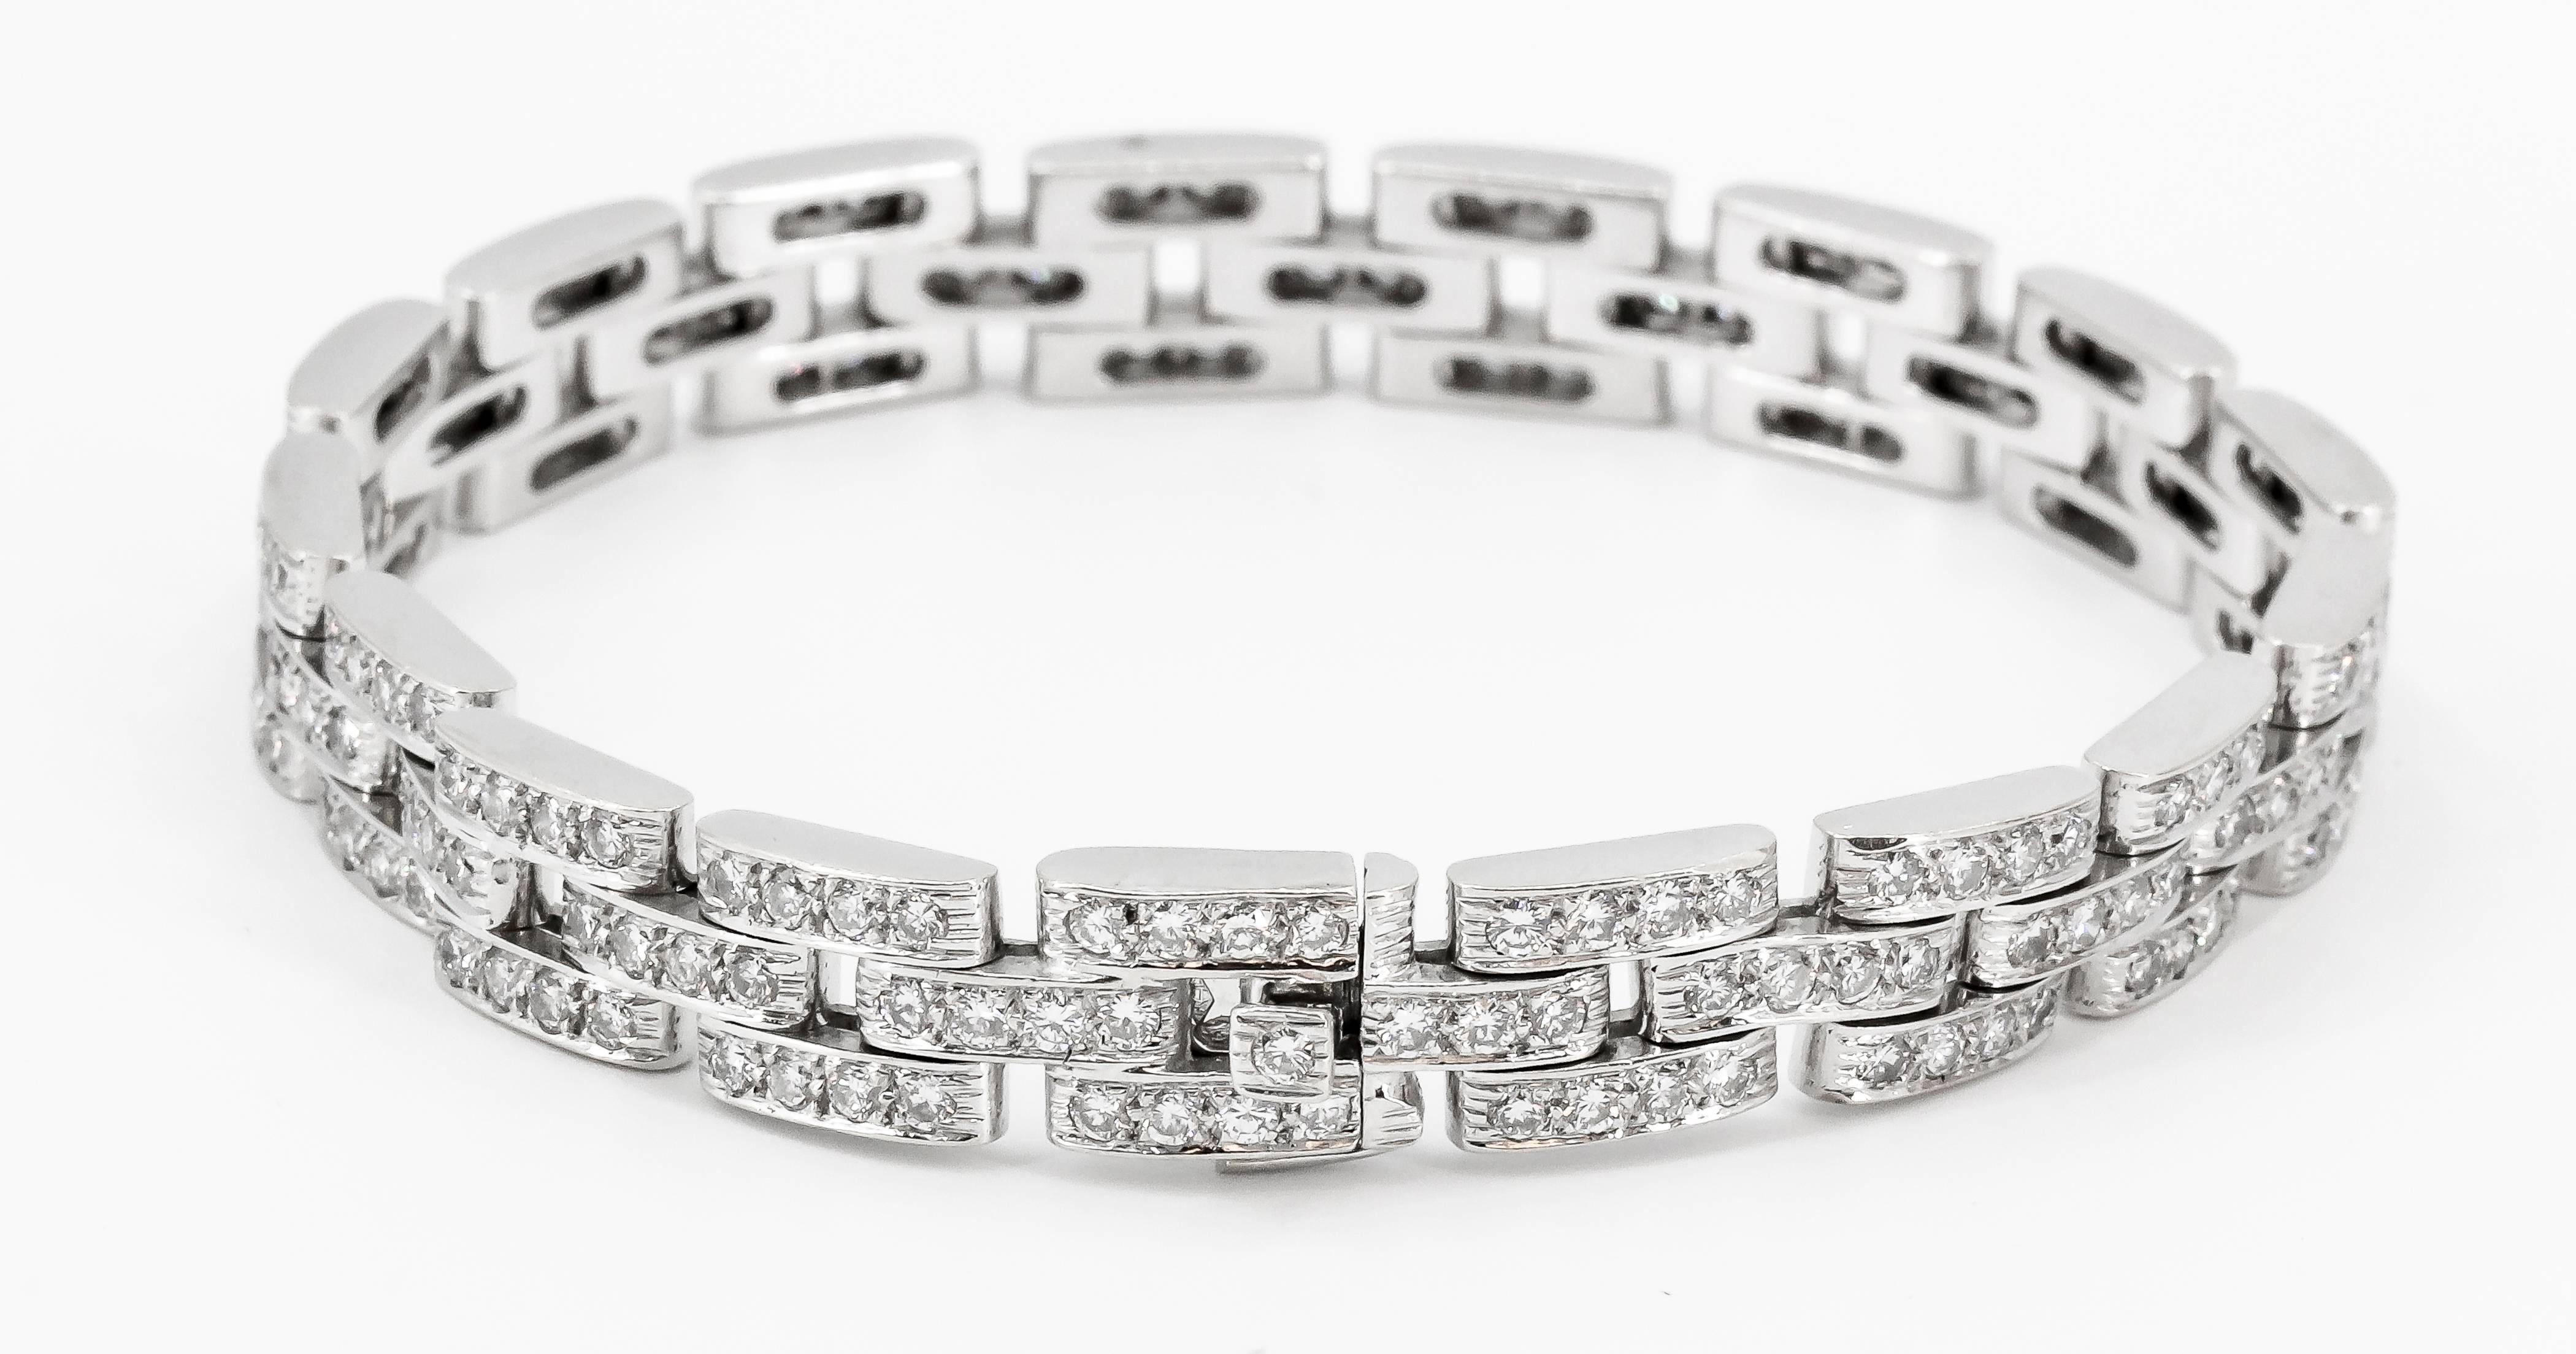 Elegant diamond and 18k white gold 3 row link bracelet from the 